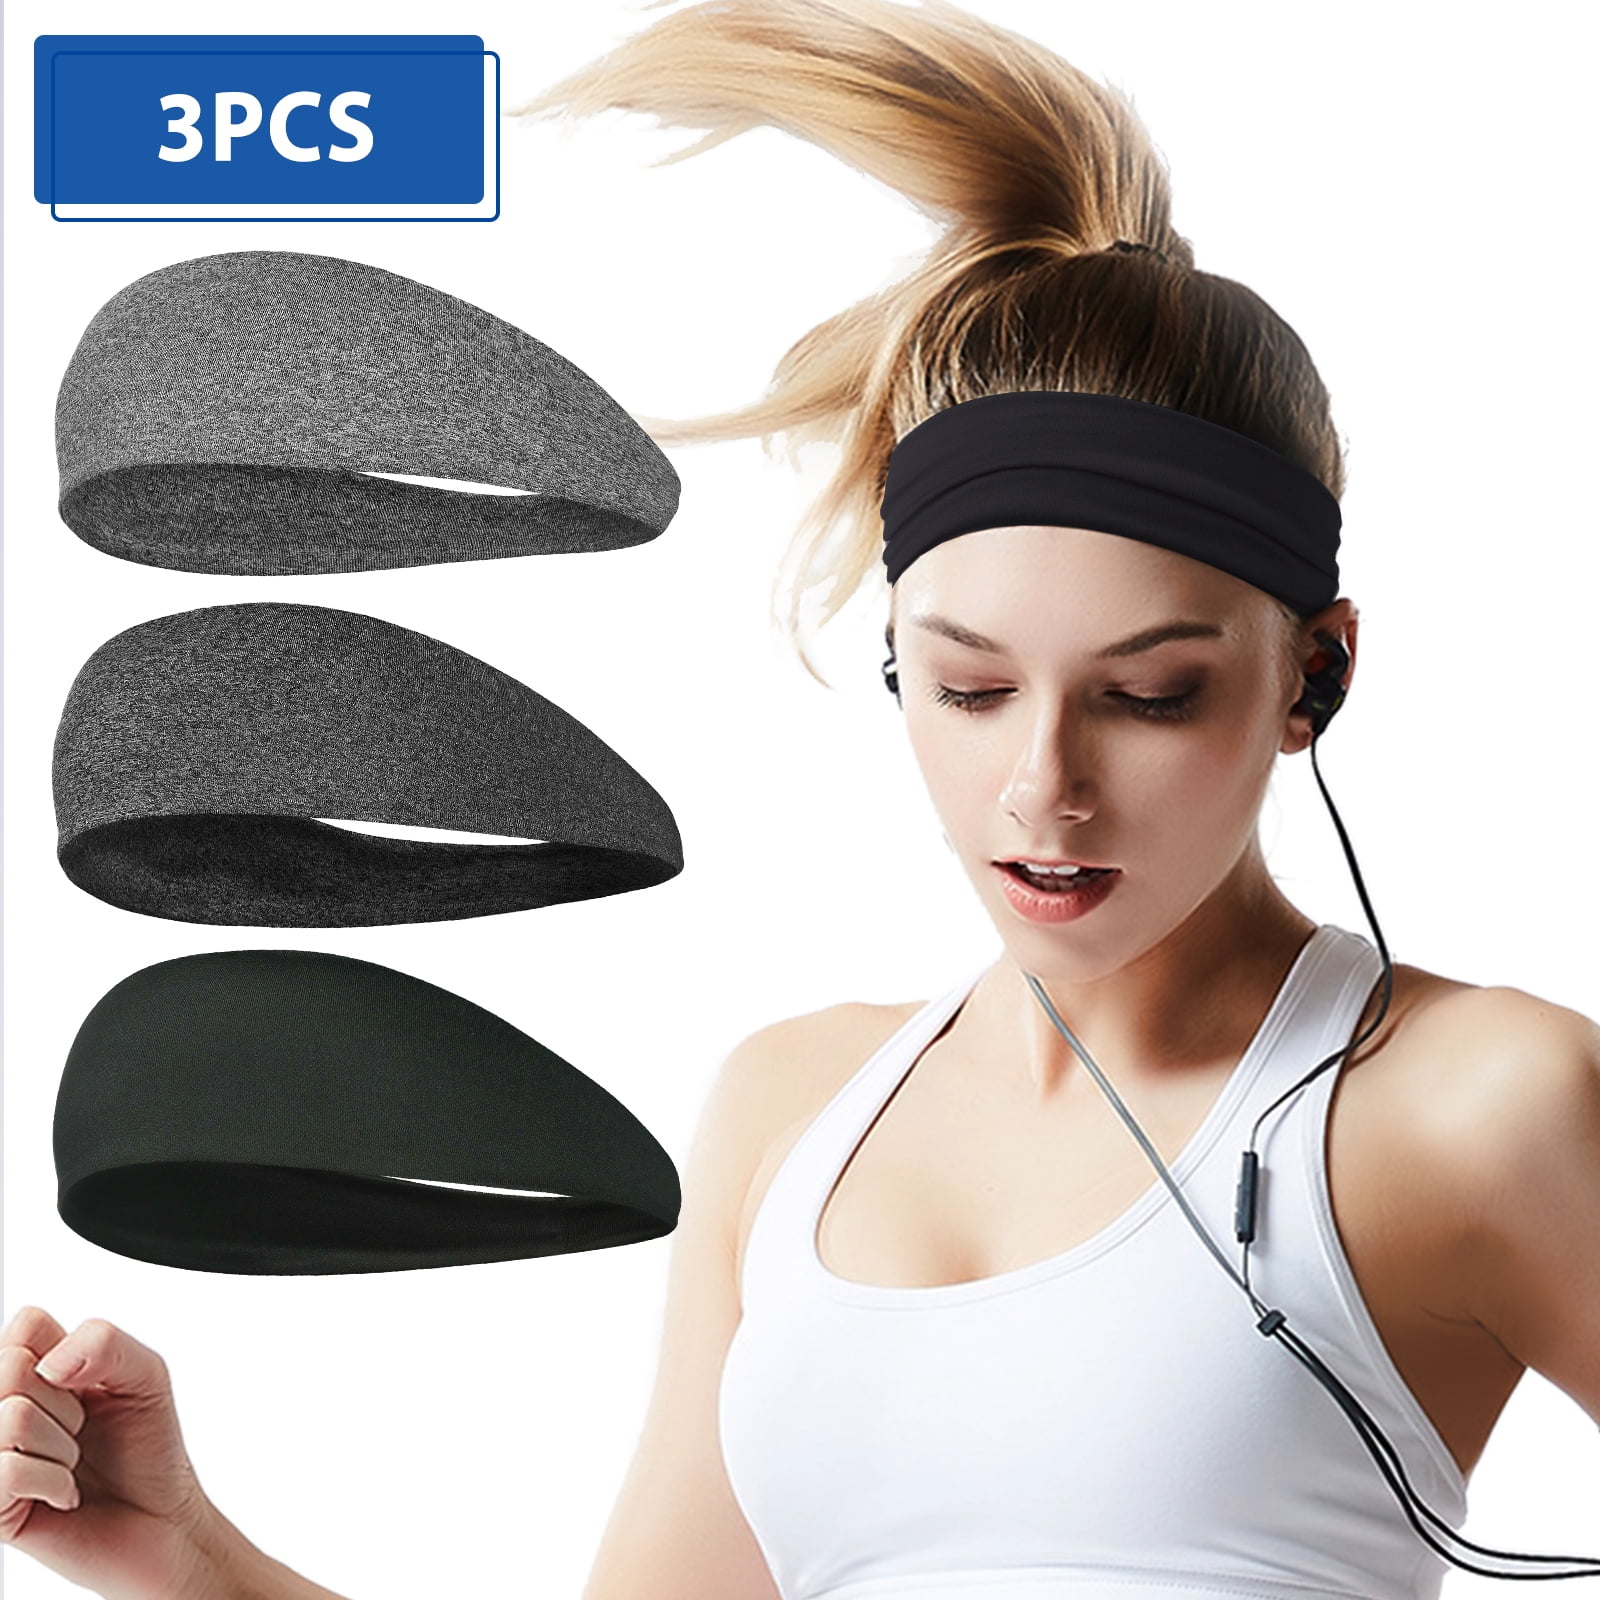 3pcs Sports Headbands, TSV Elastic Workout Hairbands for Women and Men ...